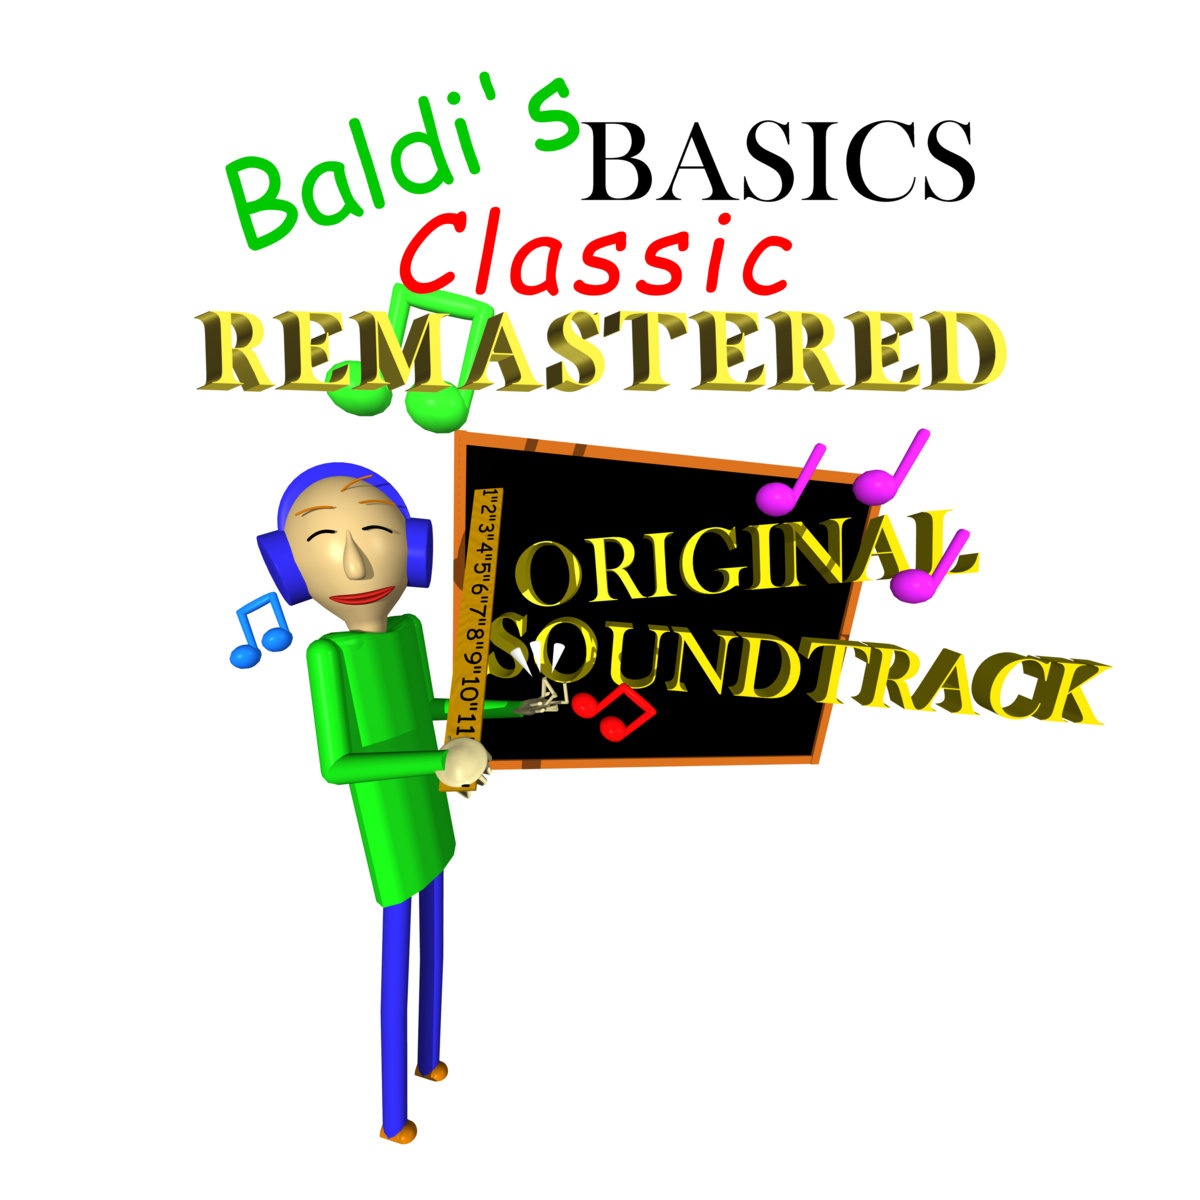 Baldi's Basics Classic Remastered Original Soundtrack [COMPLETE] 